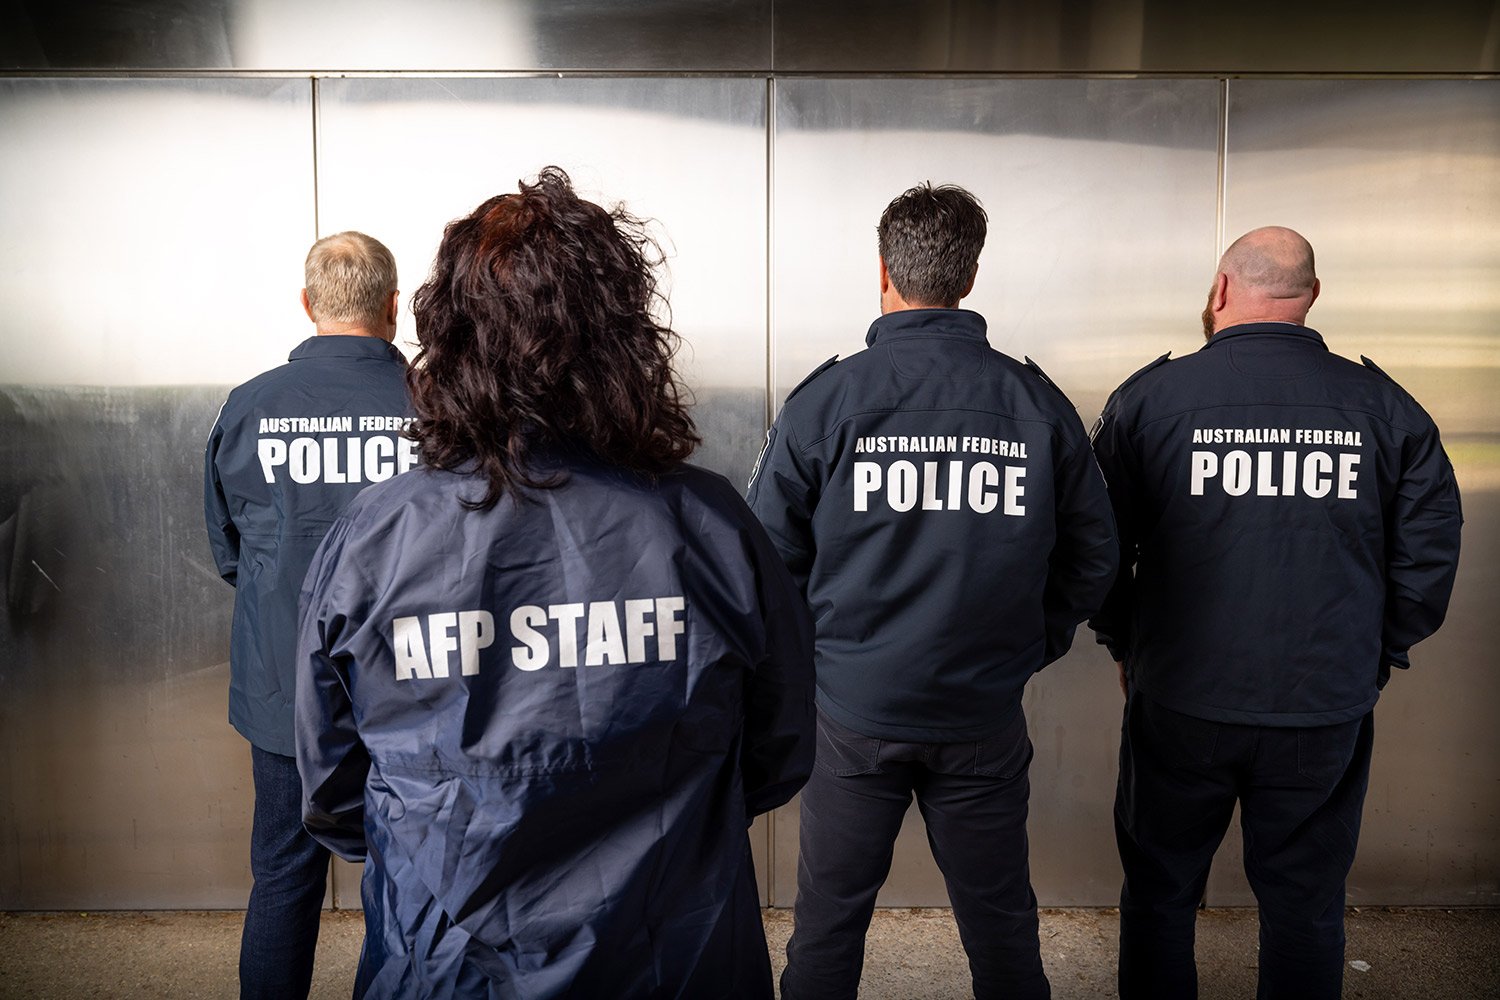 The AFP’s specialist Fugitive Apprehension Strike Team (FAST),